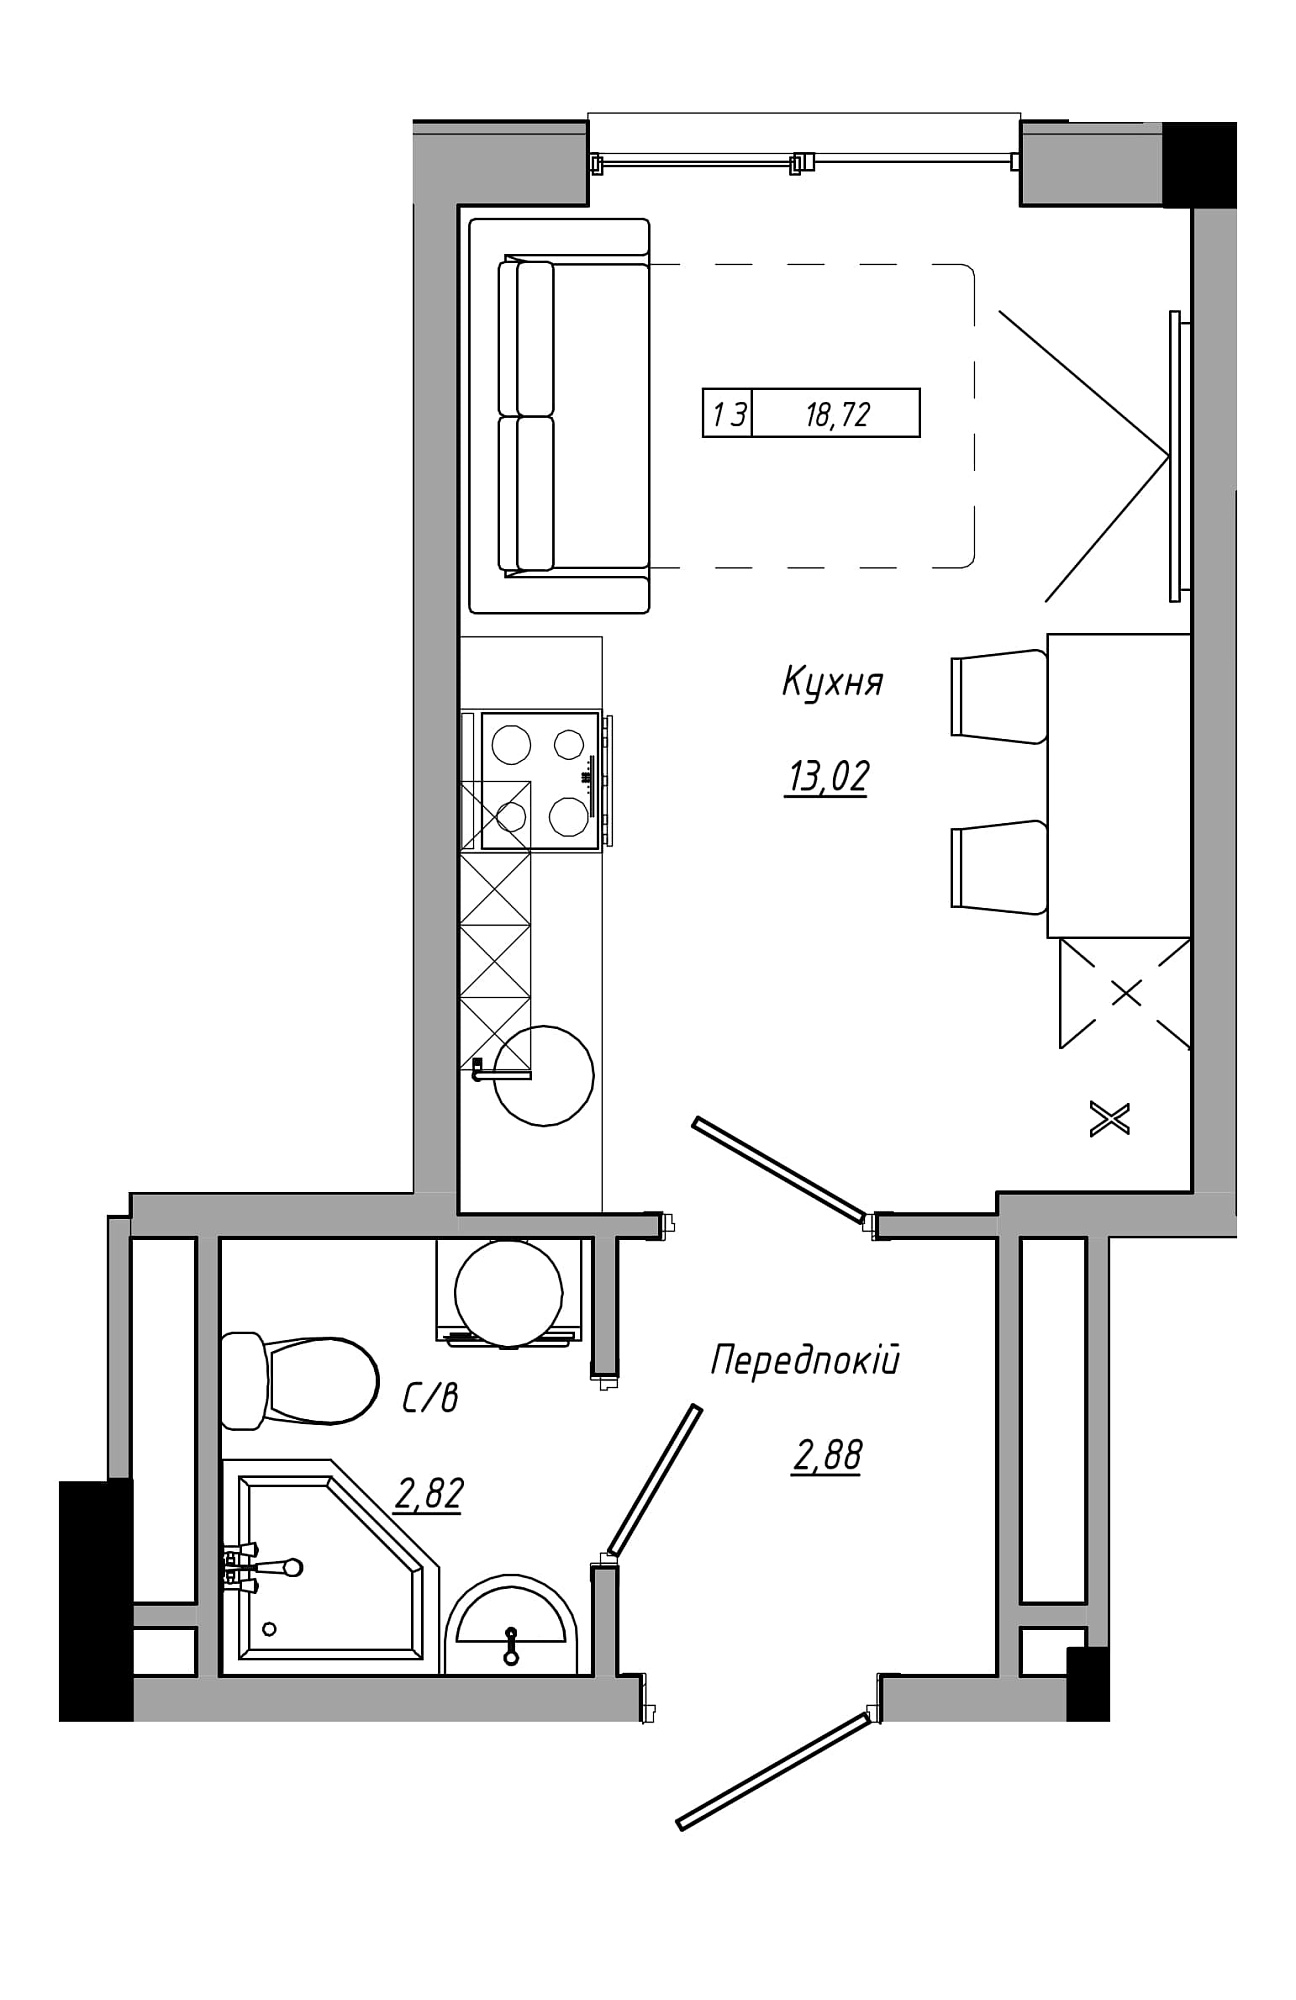 Планировка Smart-квартира площей 18.72м2, AB-21-11/00011.